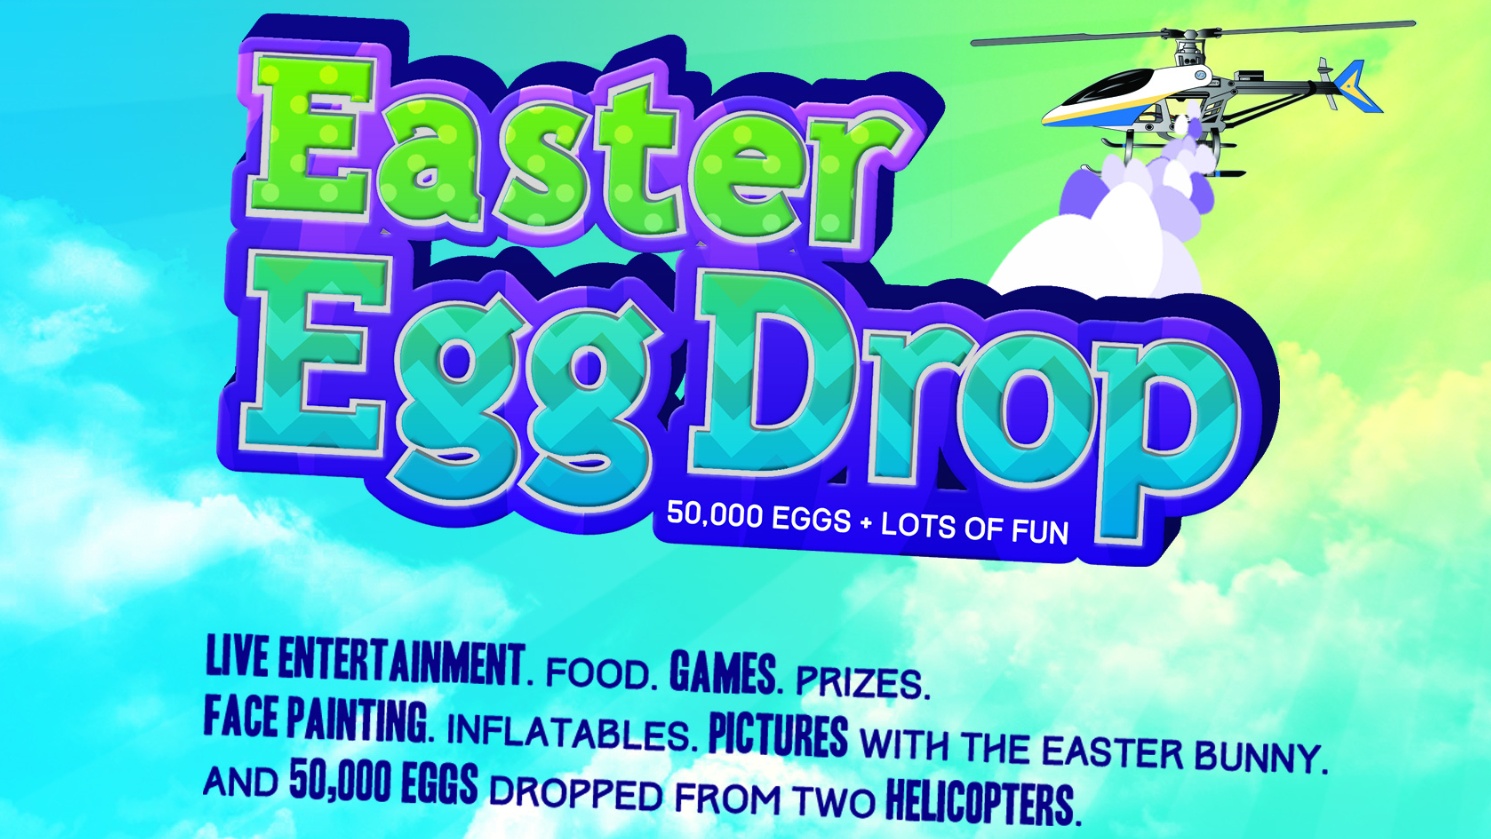 2016 Helicopter Egg Drop SponsorMyEvent